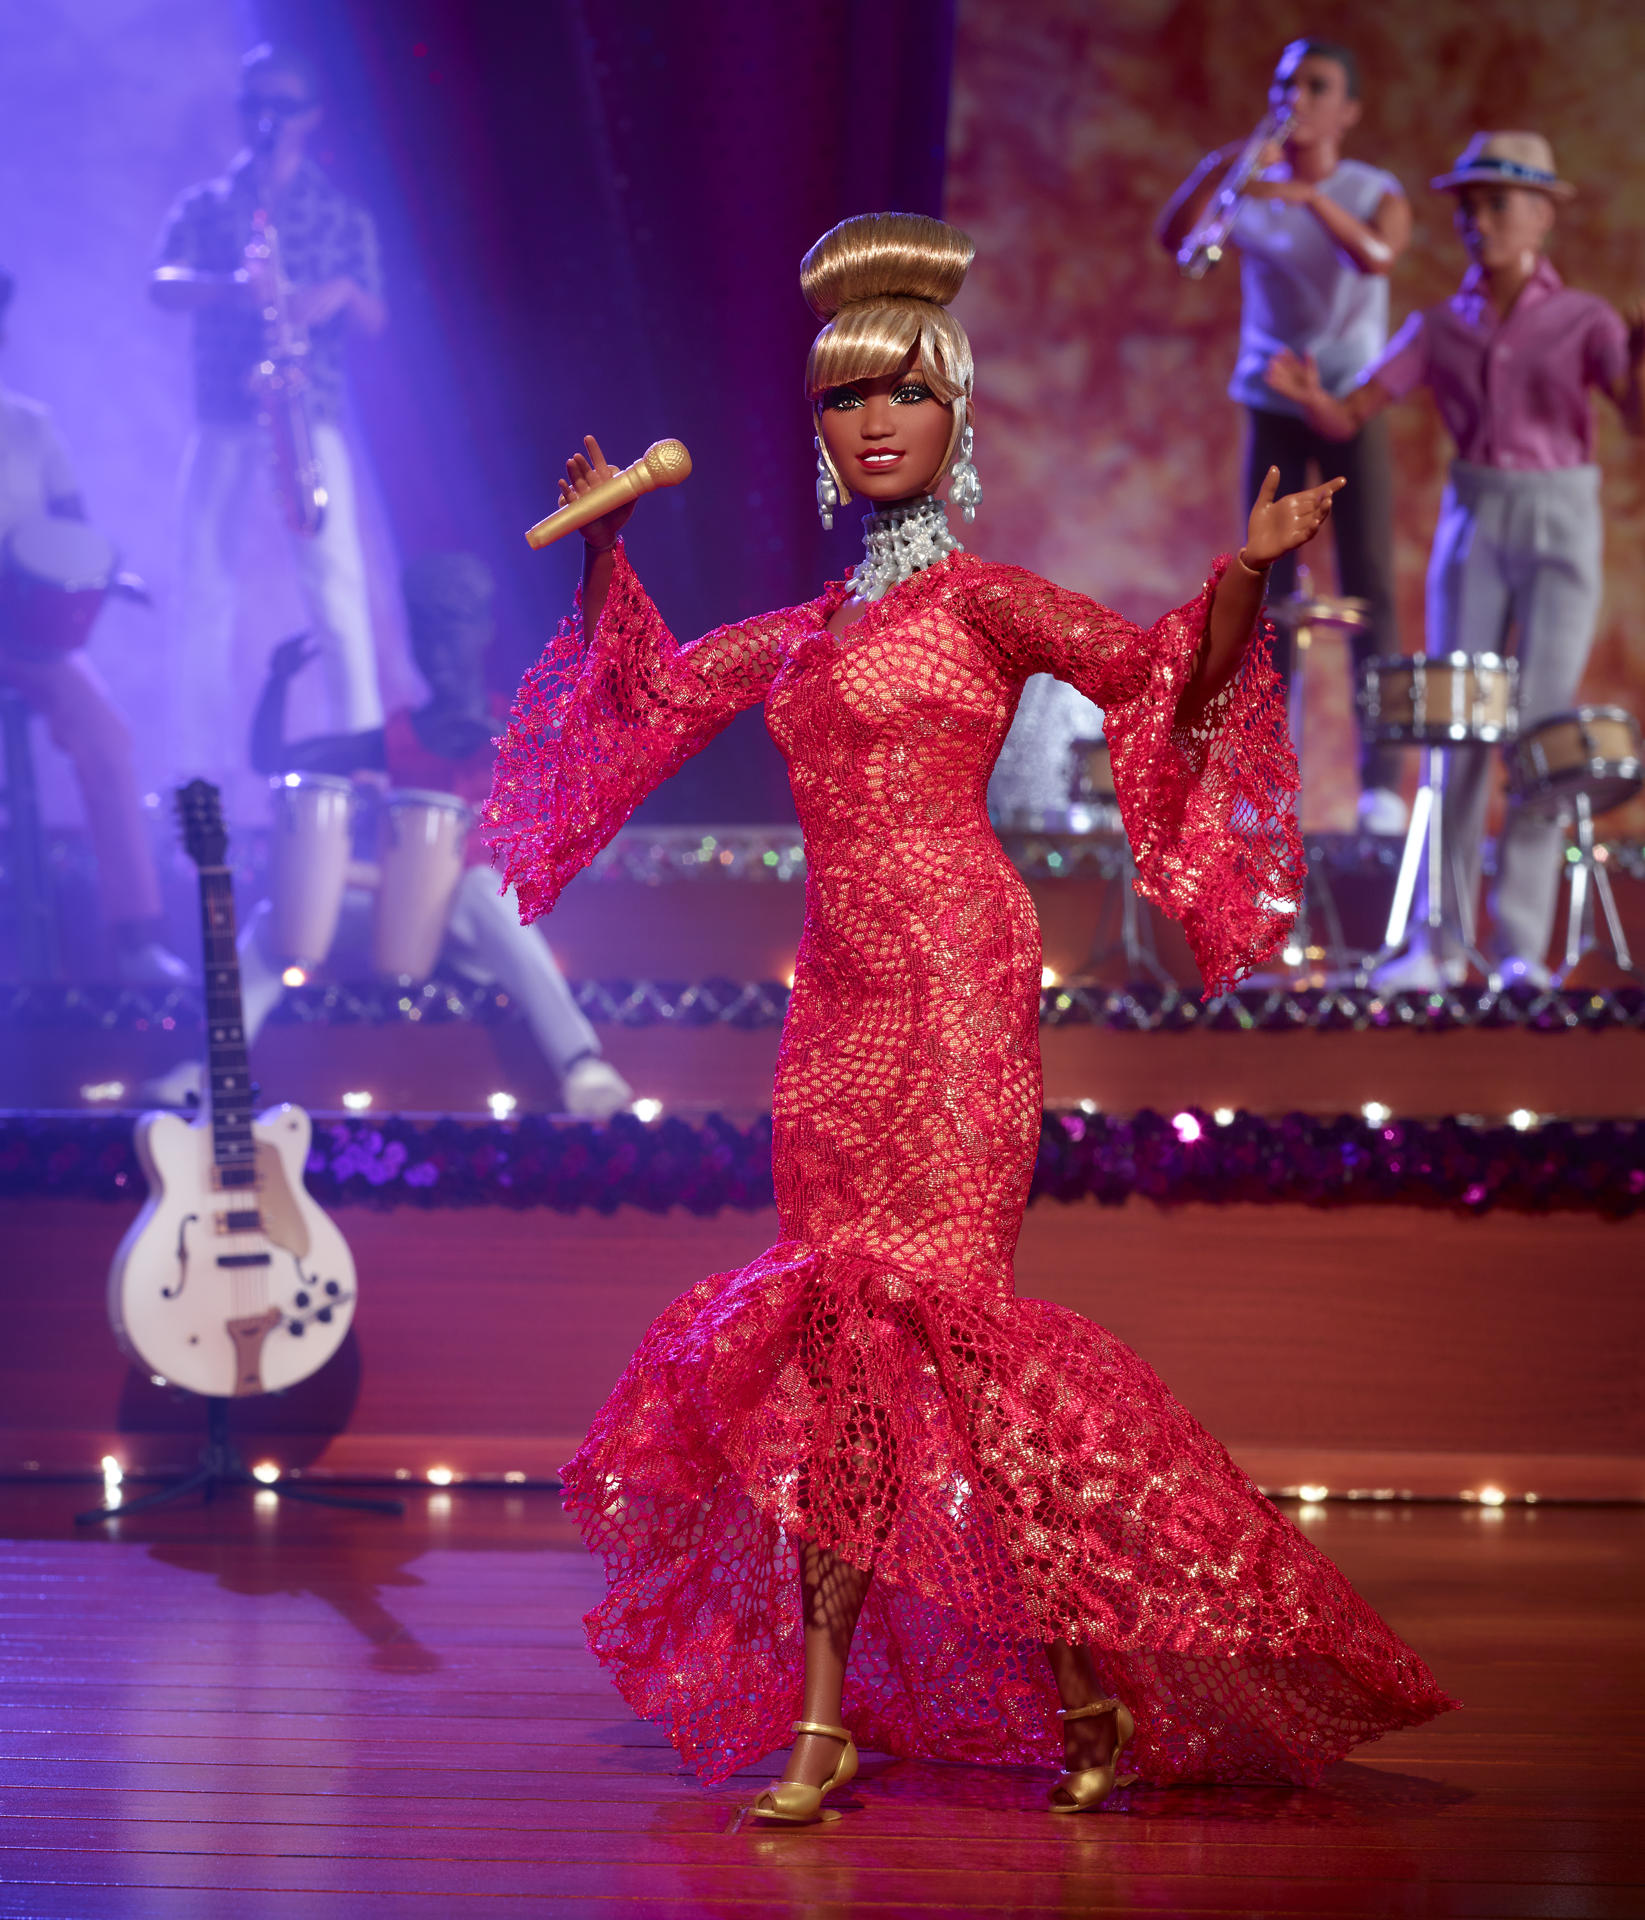 La muñeca Barbie con la figura de Celia Cruz sale a la venta